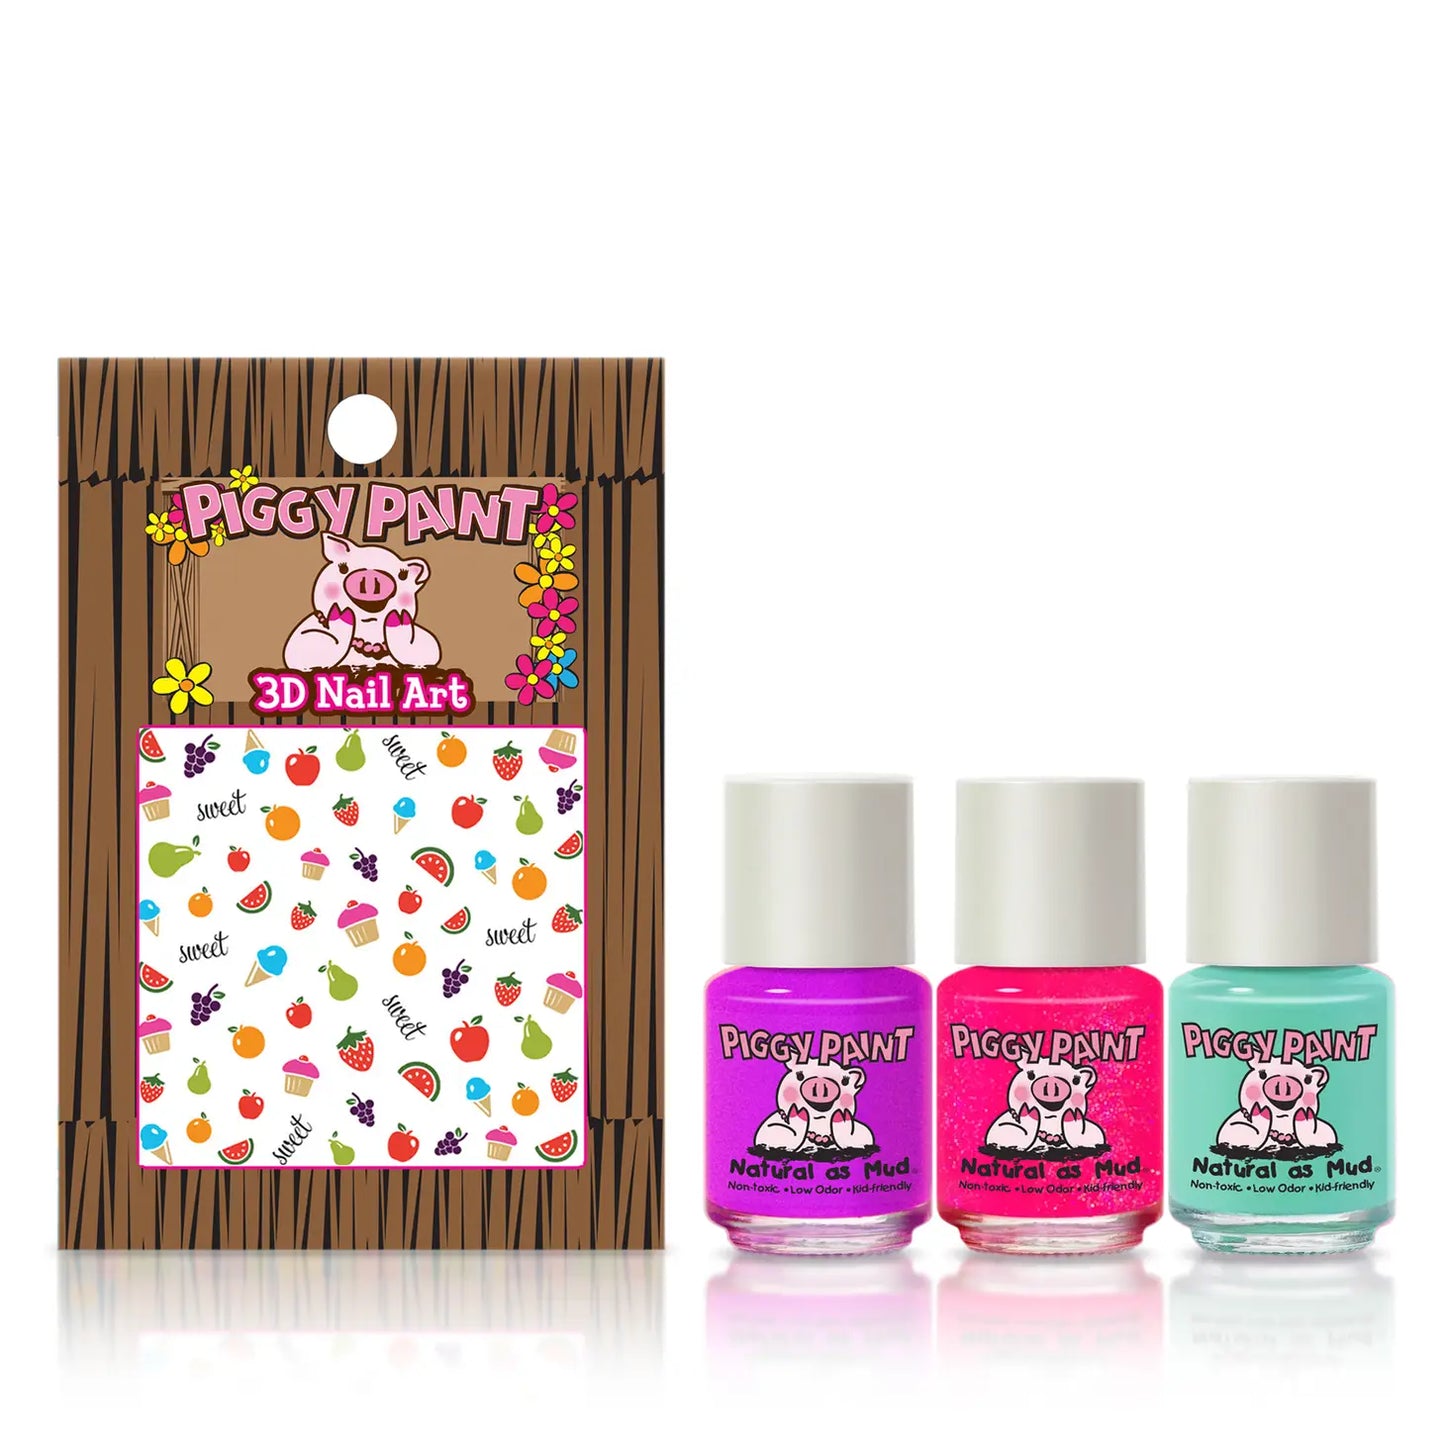 Piggy Paint Non-Toxic Nail Polish Gift Set for Kids - 3 Bottles